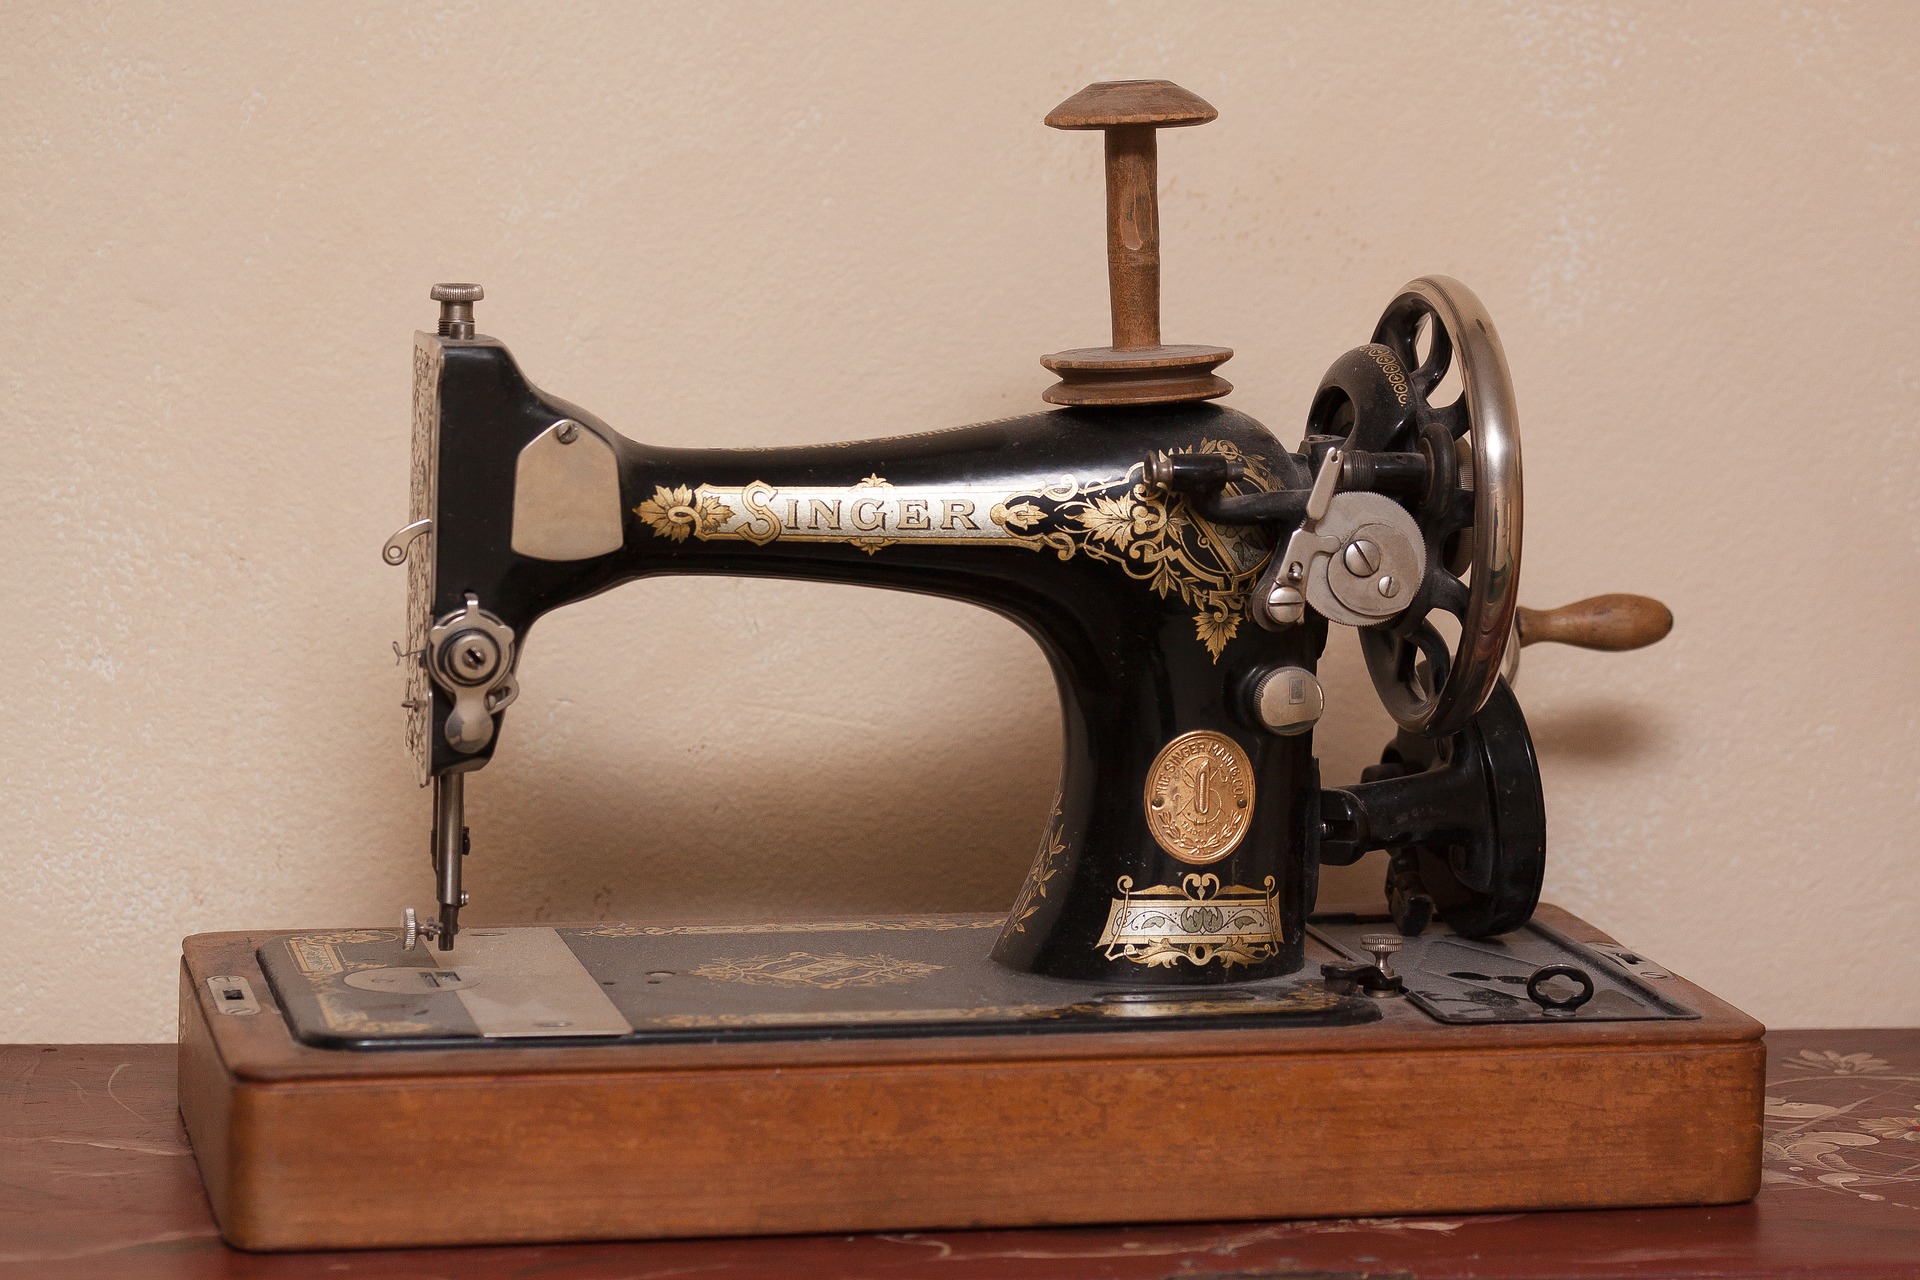 grandma's house had an old black singer sewing machine